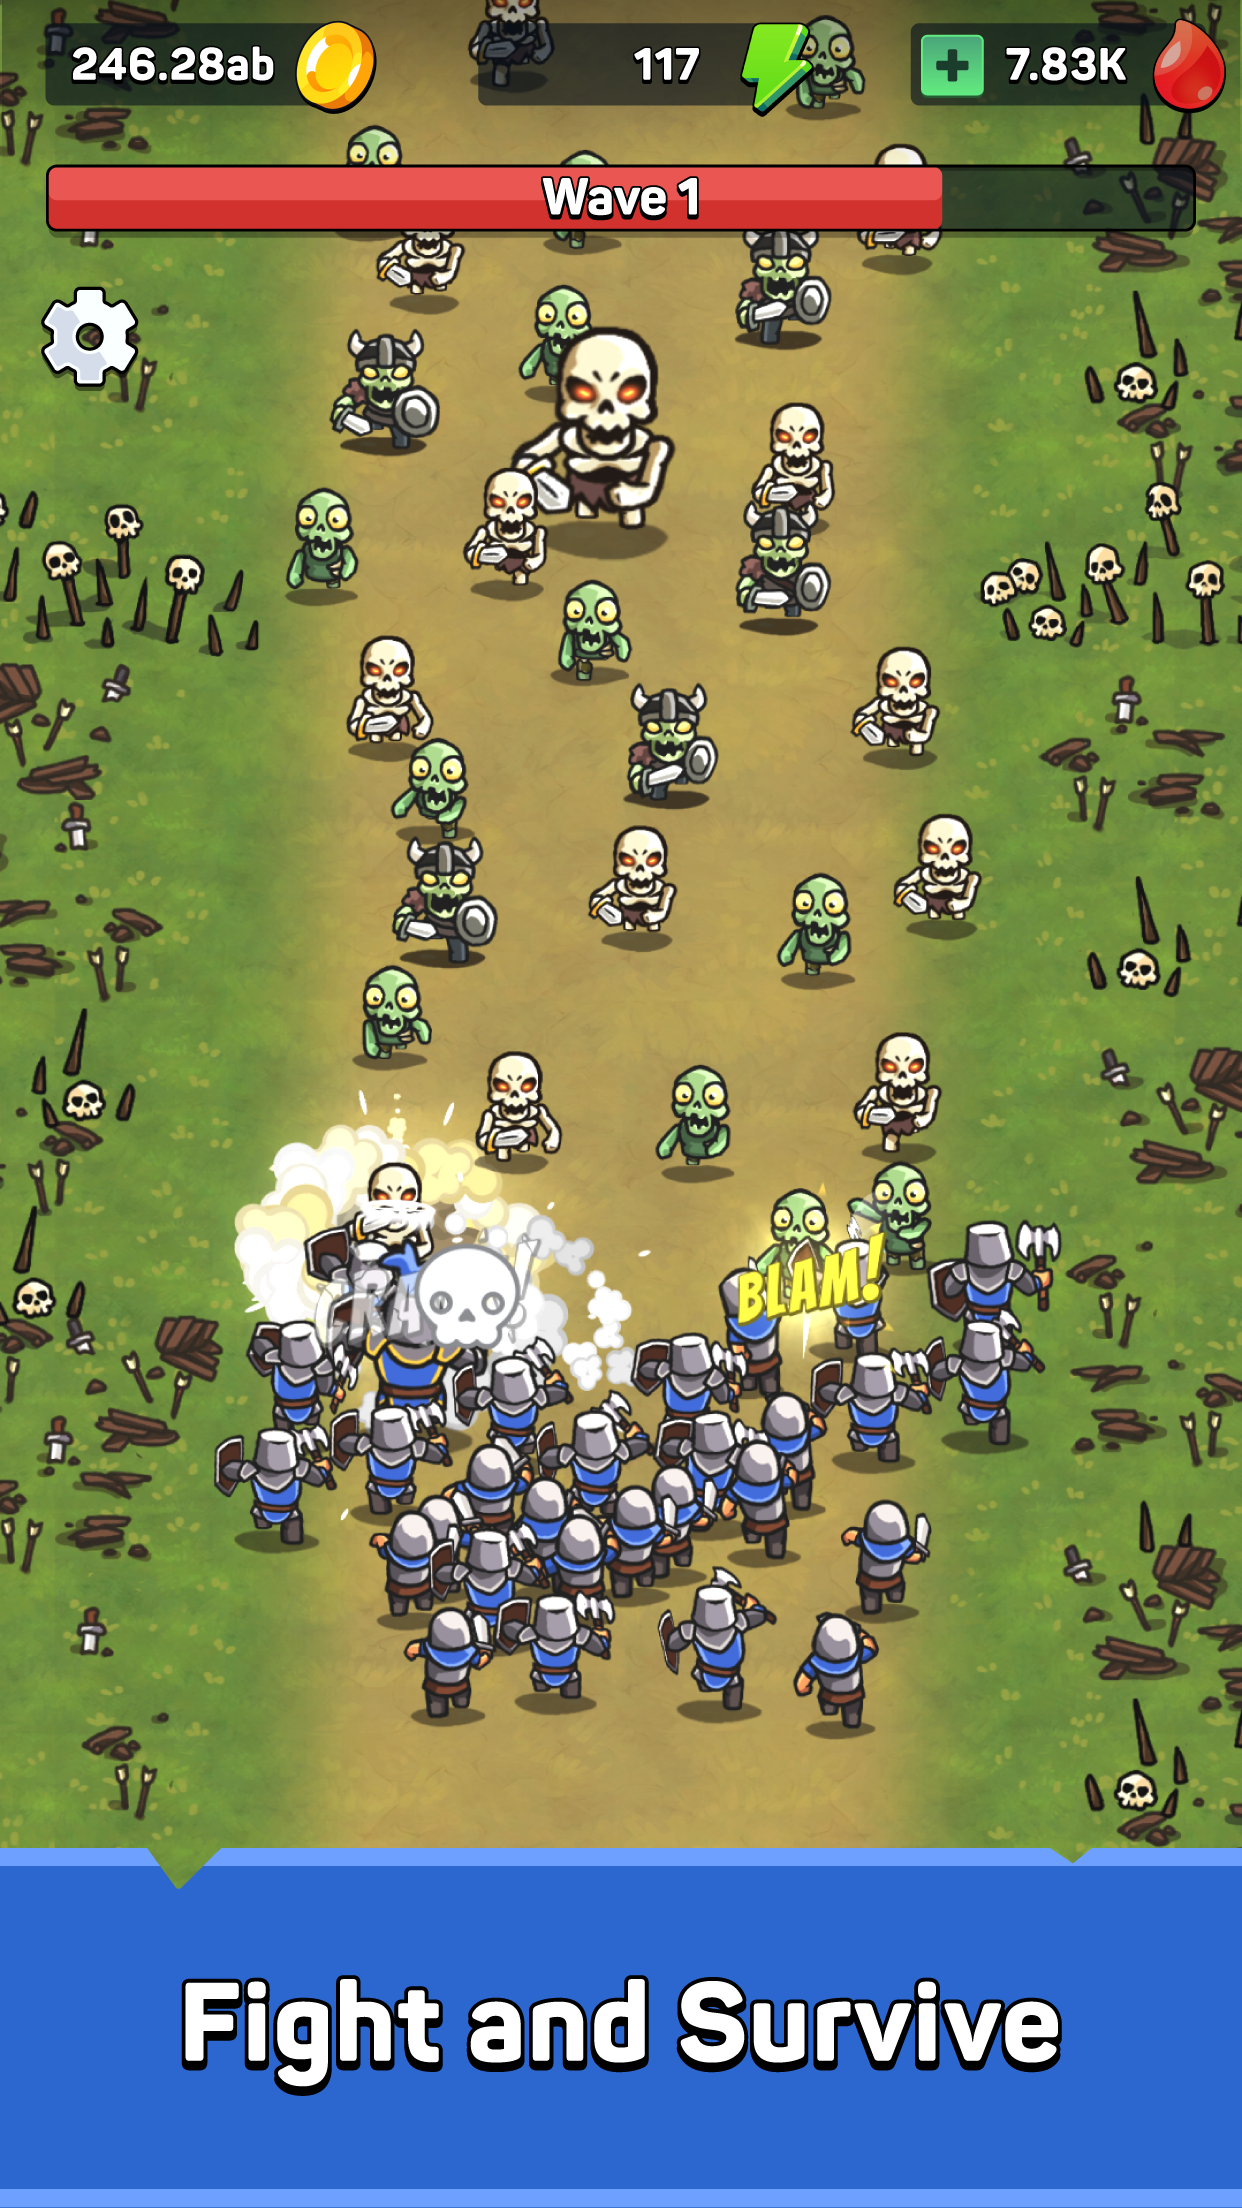 Screenshot of Chaos Legion Idle RPG